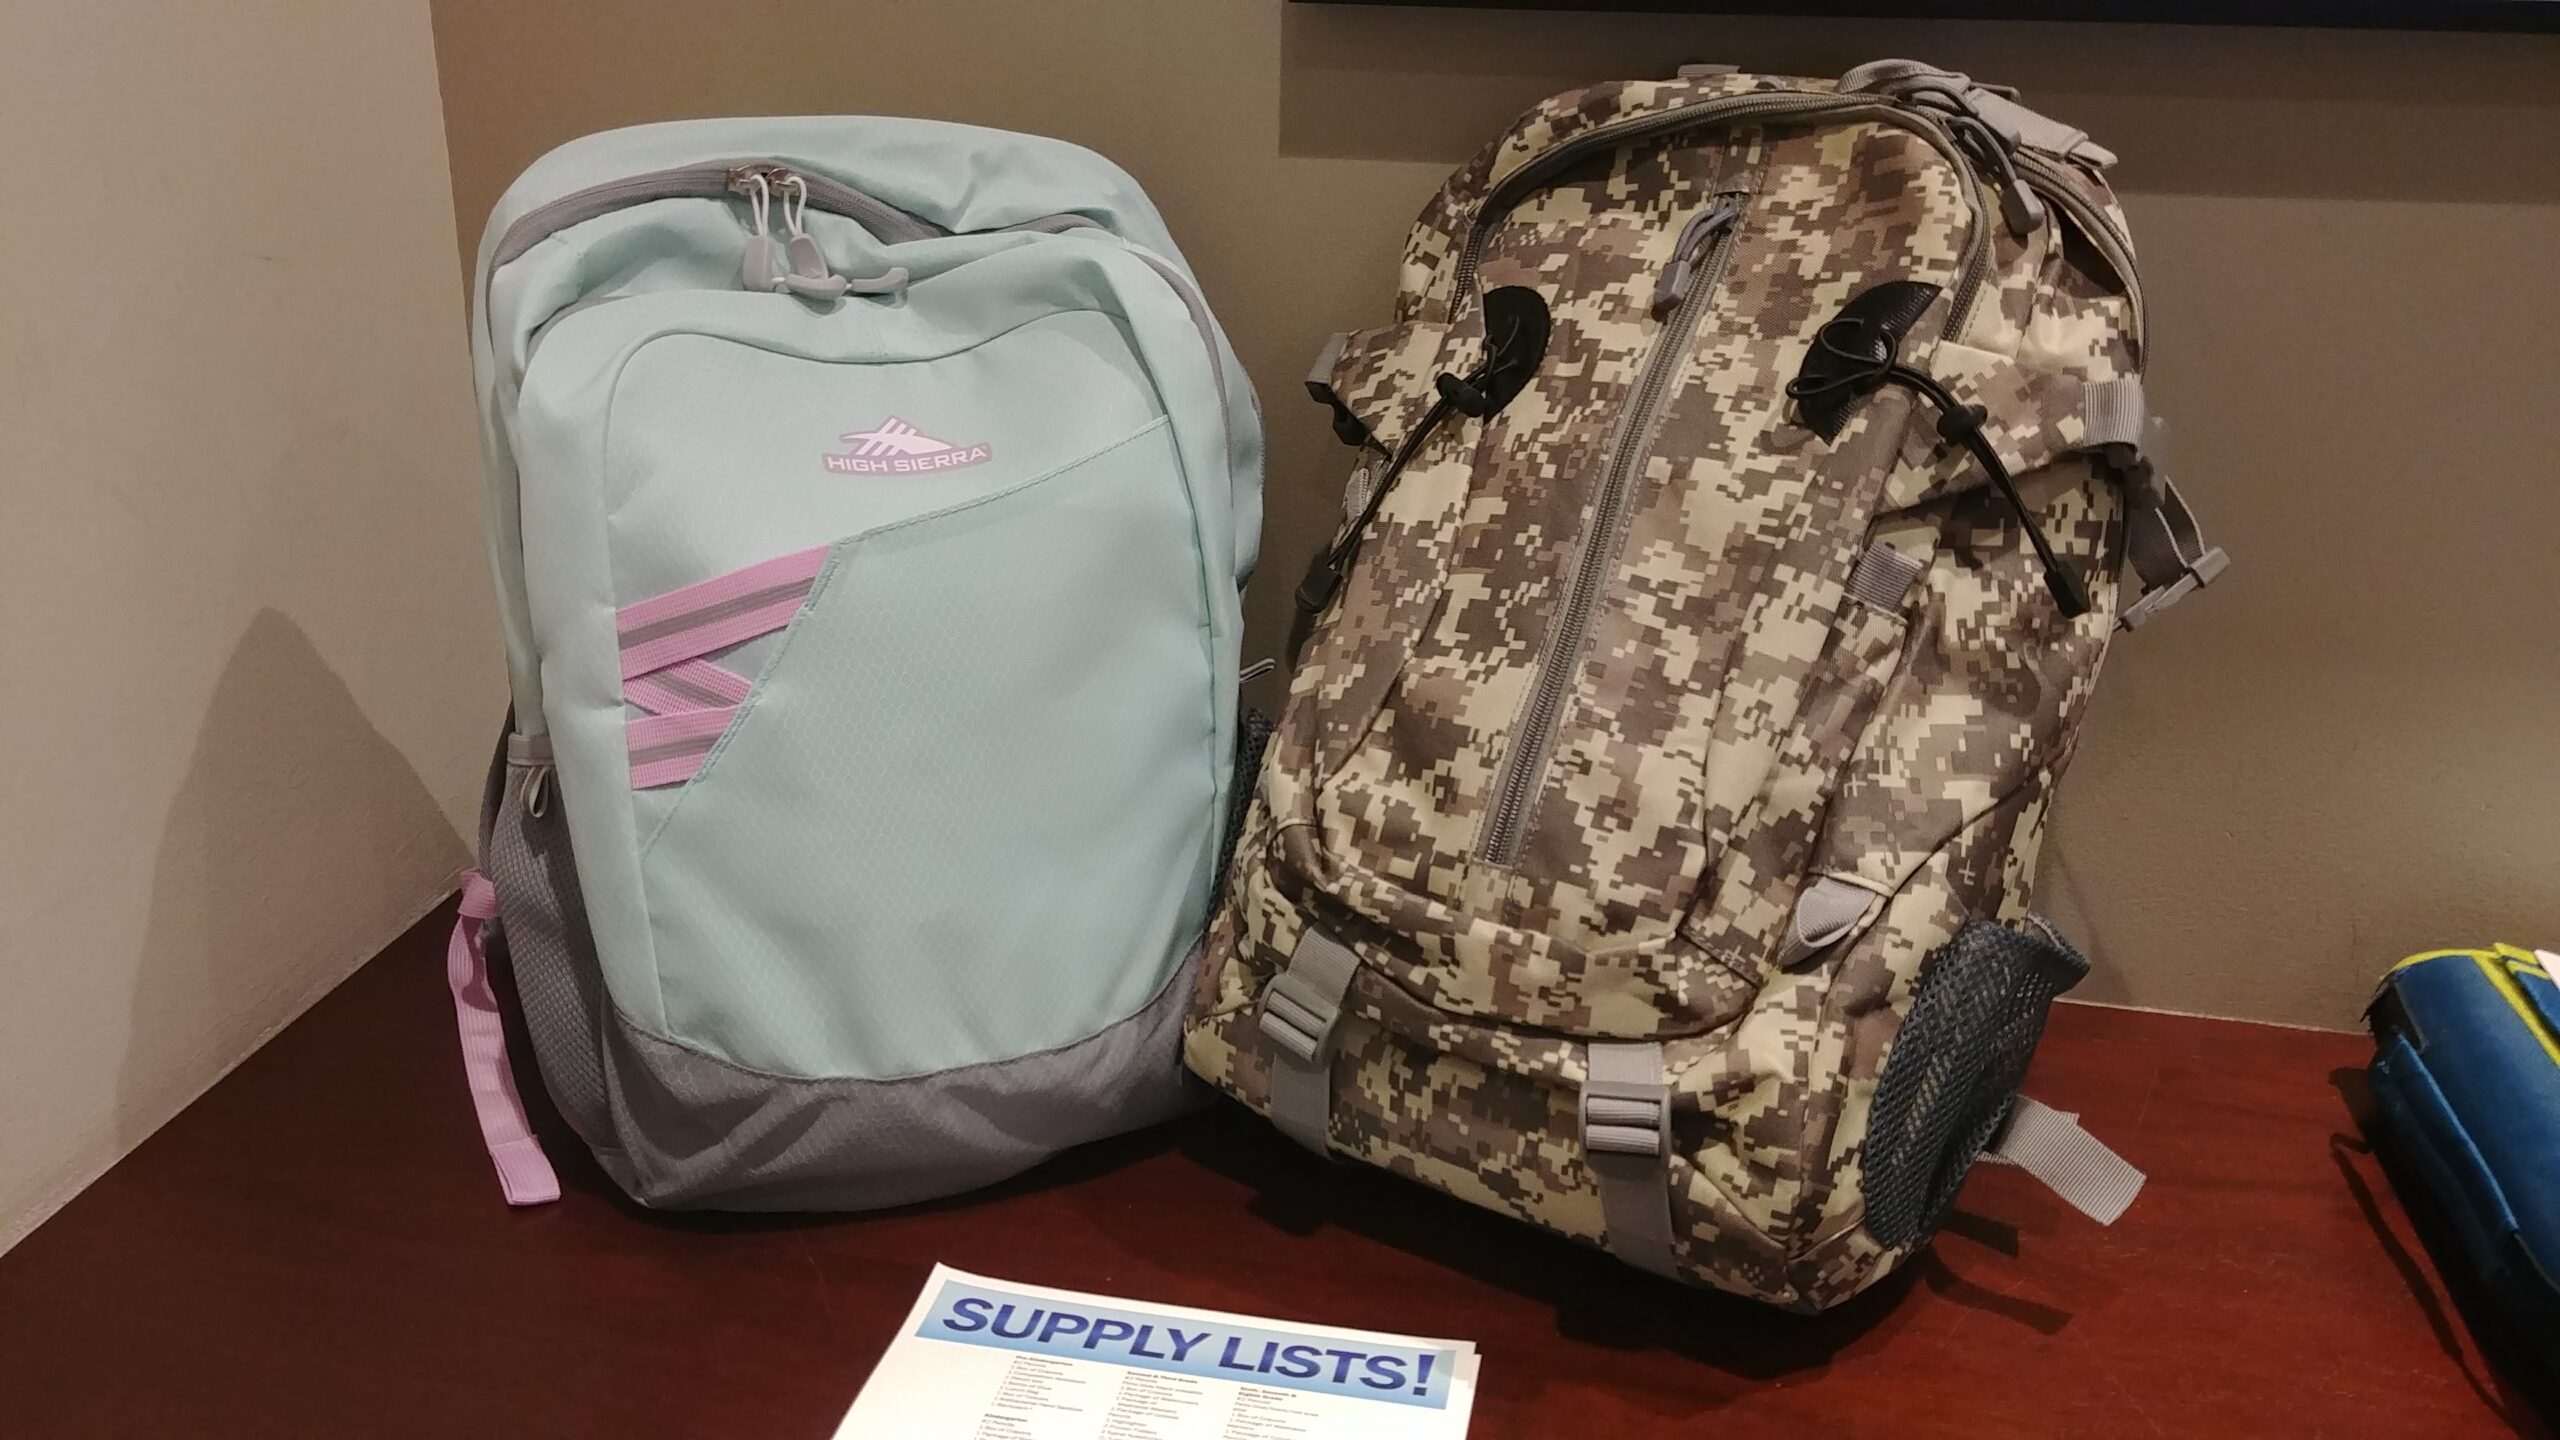 Giving Back - Operation Backpack